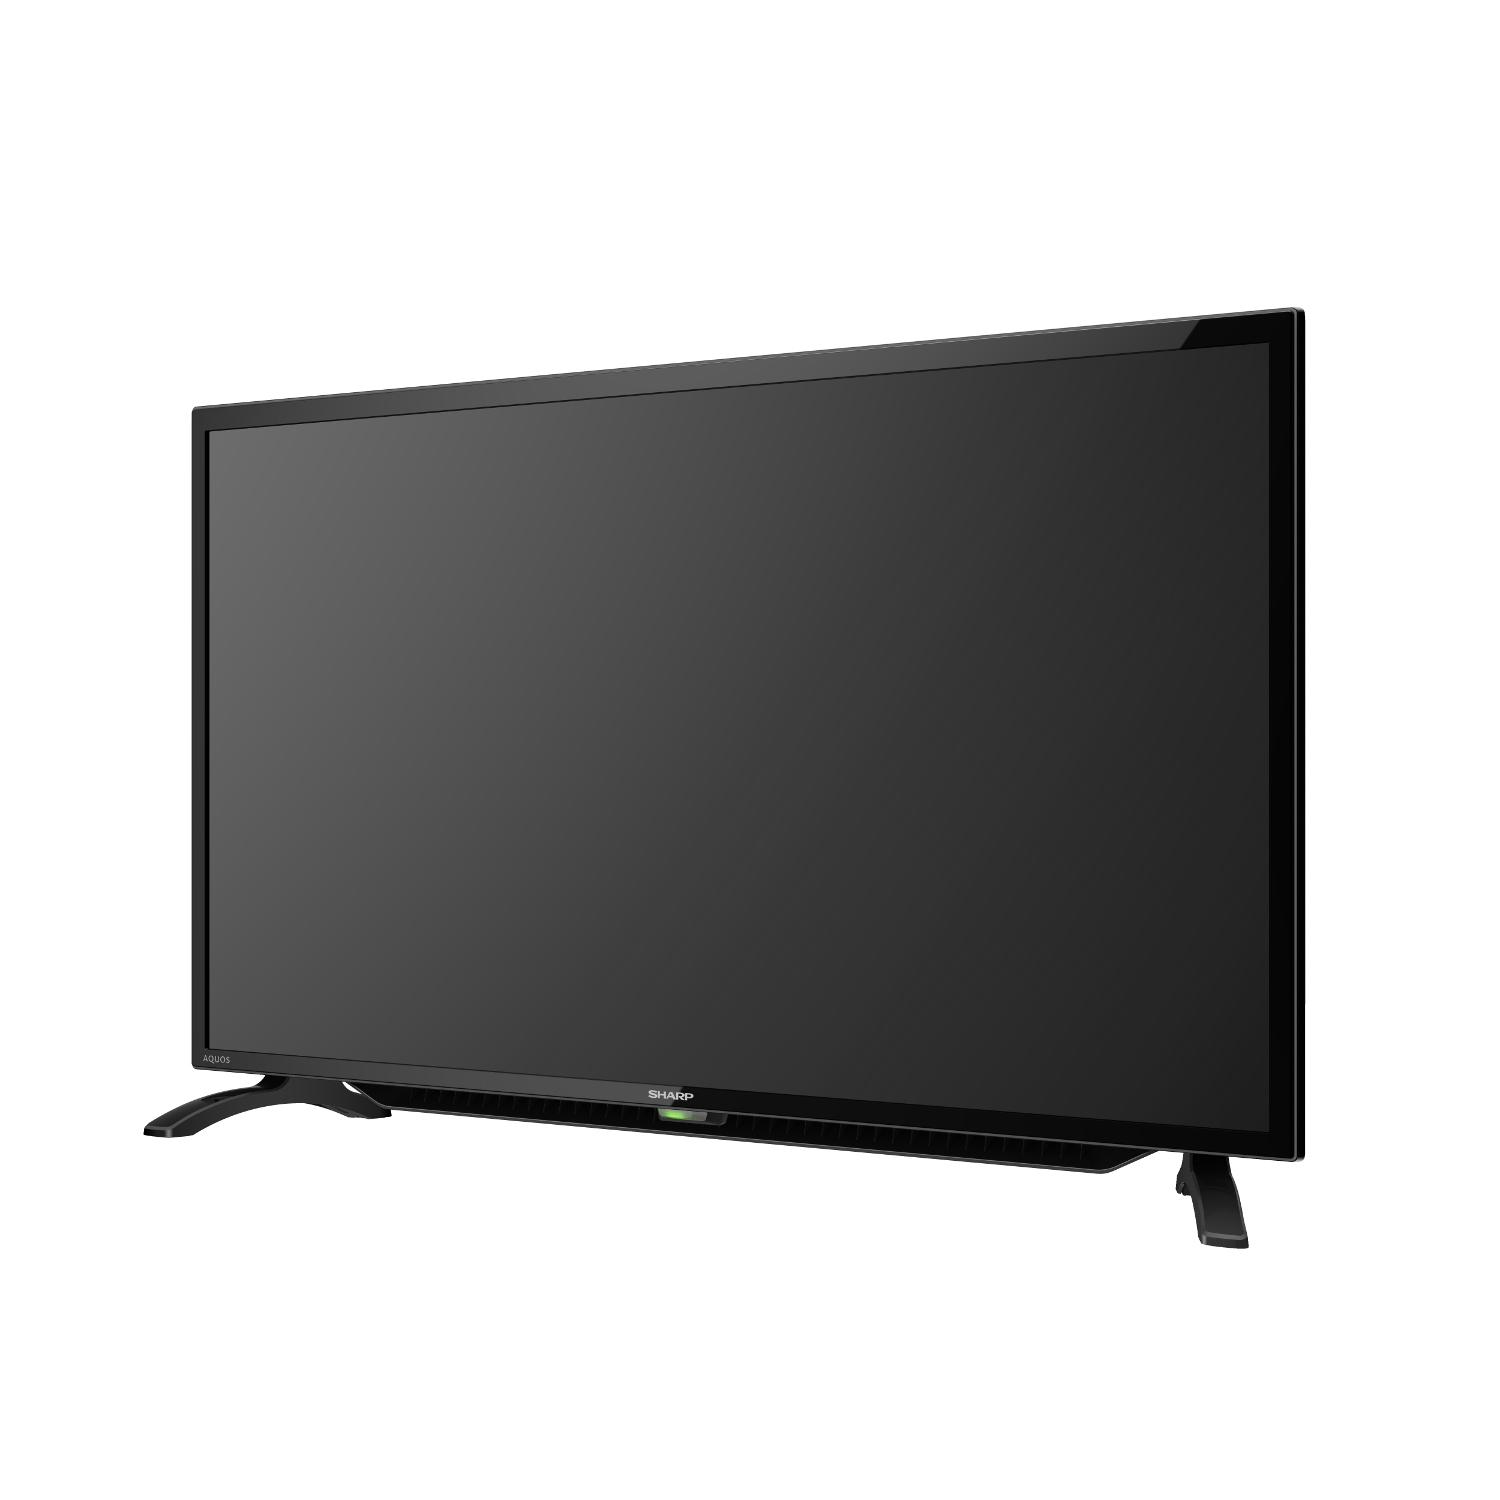 Harga TV LED SHARP 32 Inch Terbaru 2020 & Spek | Bhinneka